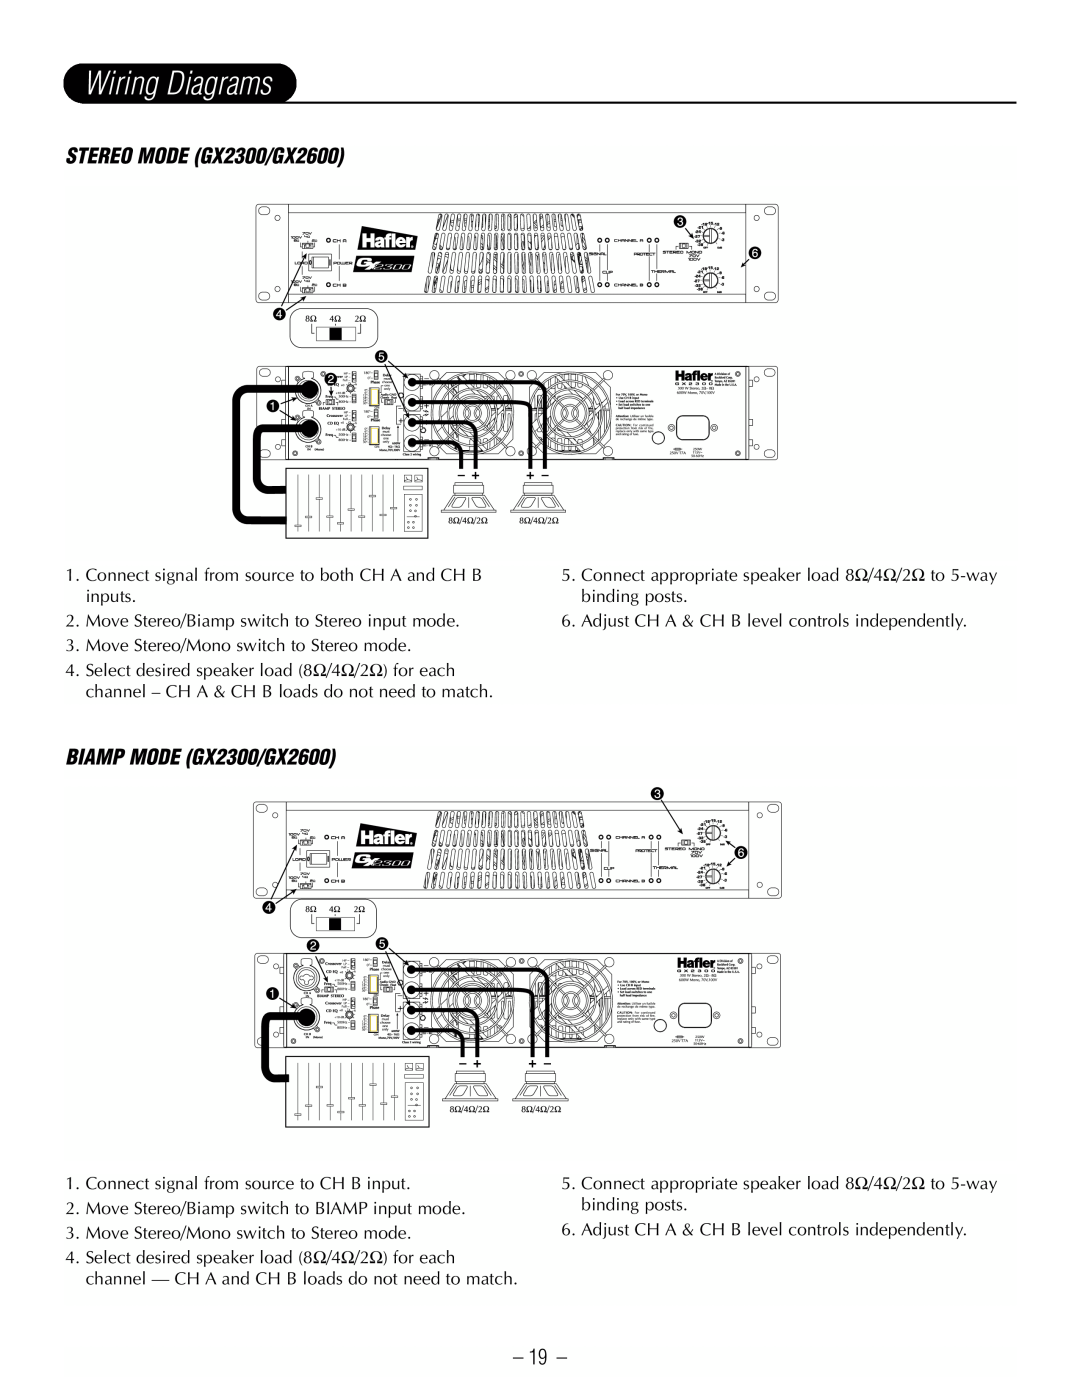 Hafler GX2300CE, GX2600CE manual Wiring Diagrams, STEREO MODE GX2300/GX2600, BIAMP MODE GX2300/GX2600 